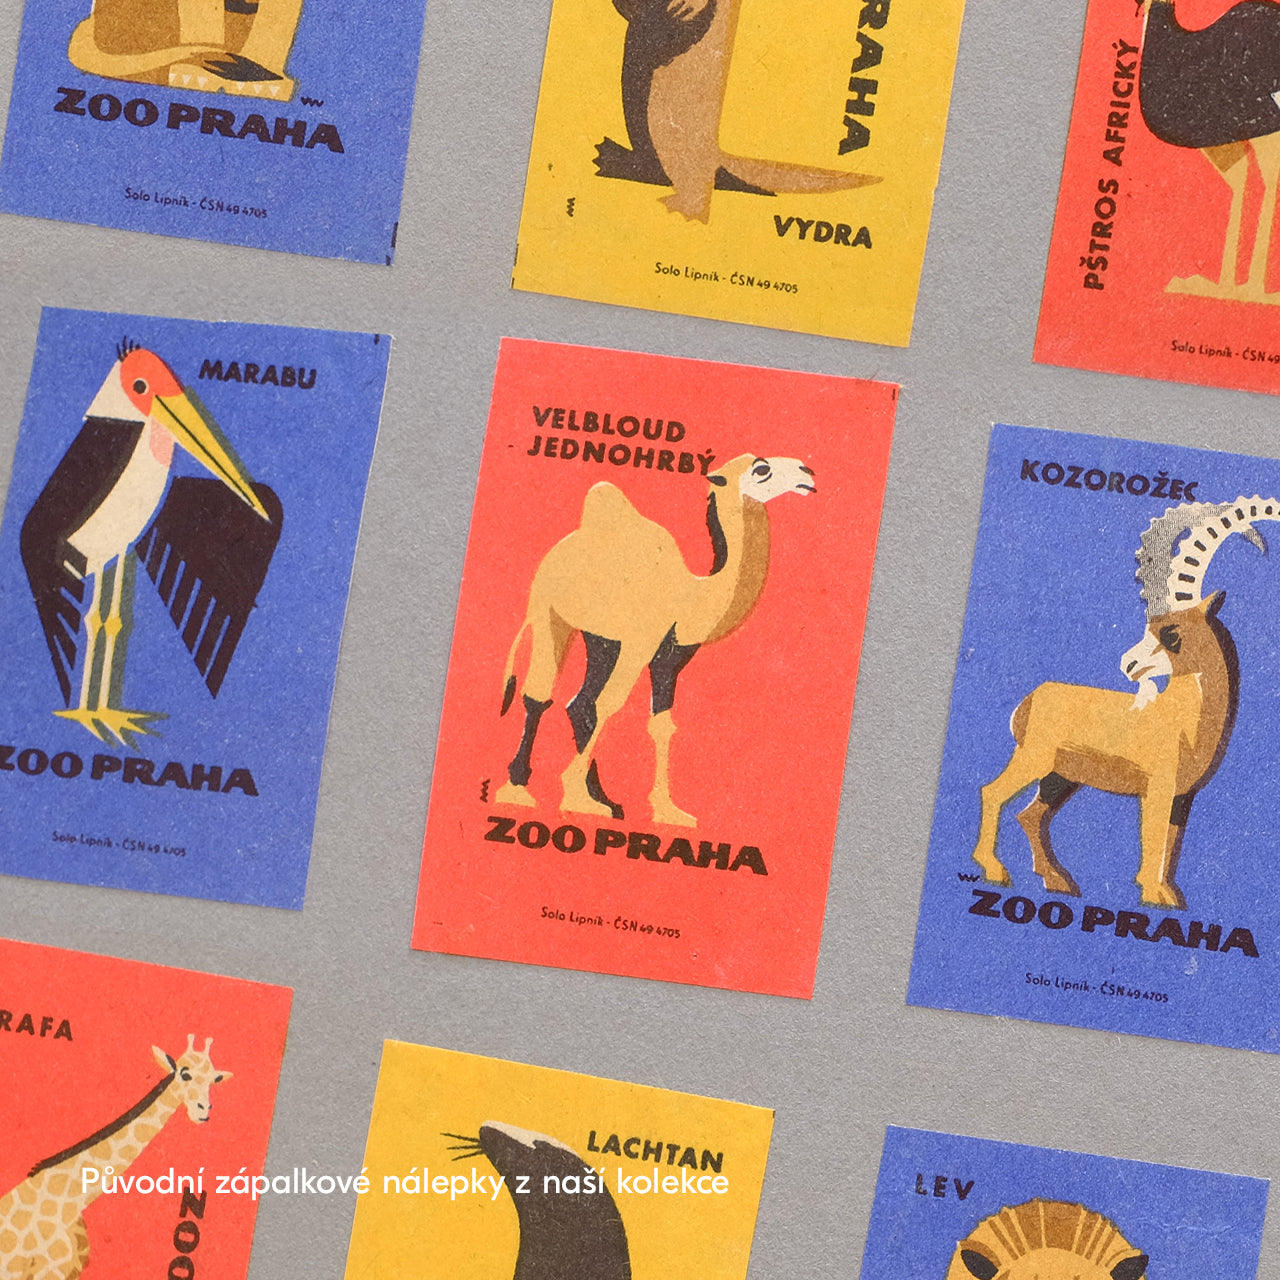 Prague Zoo - Camel - Poster 30x40 cm 